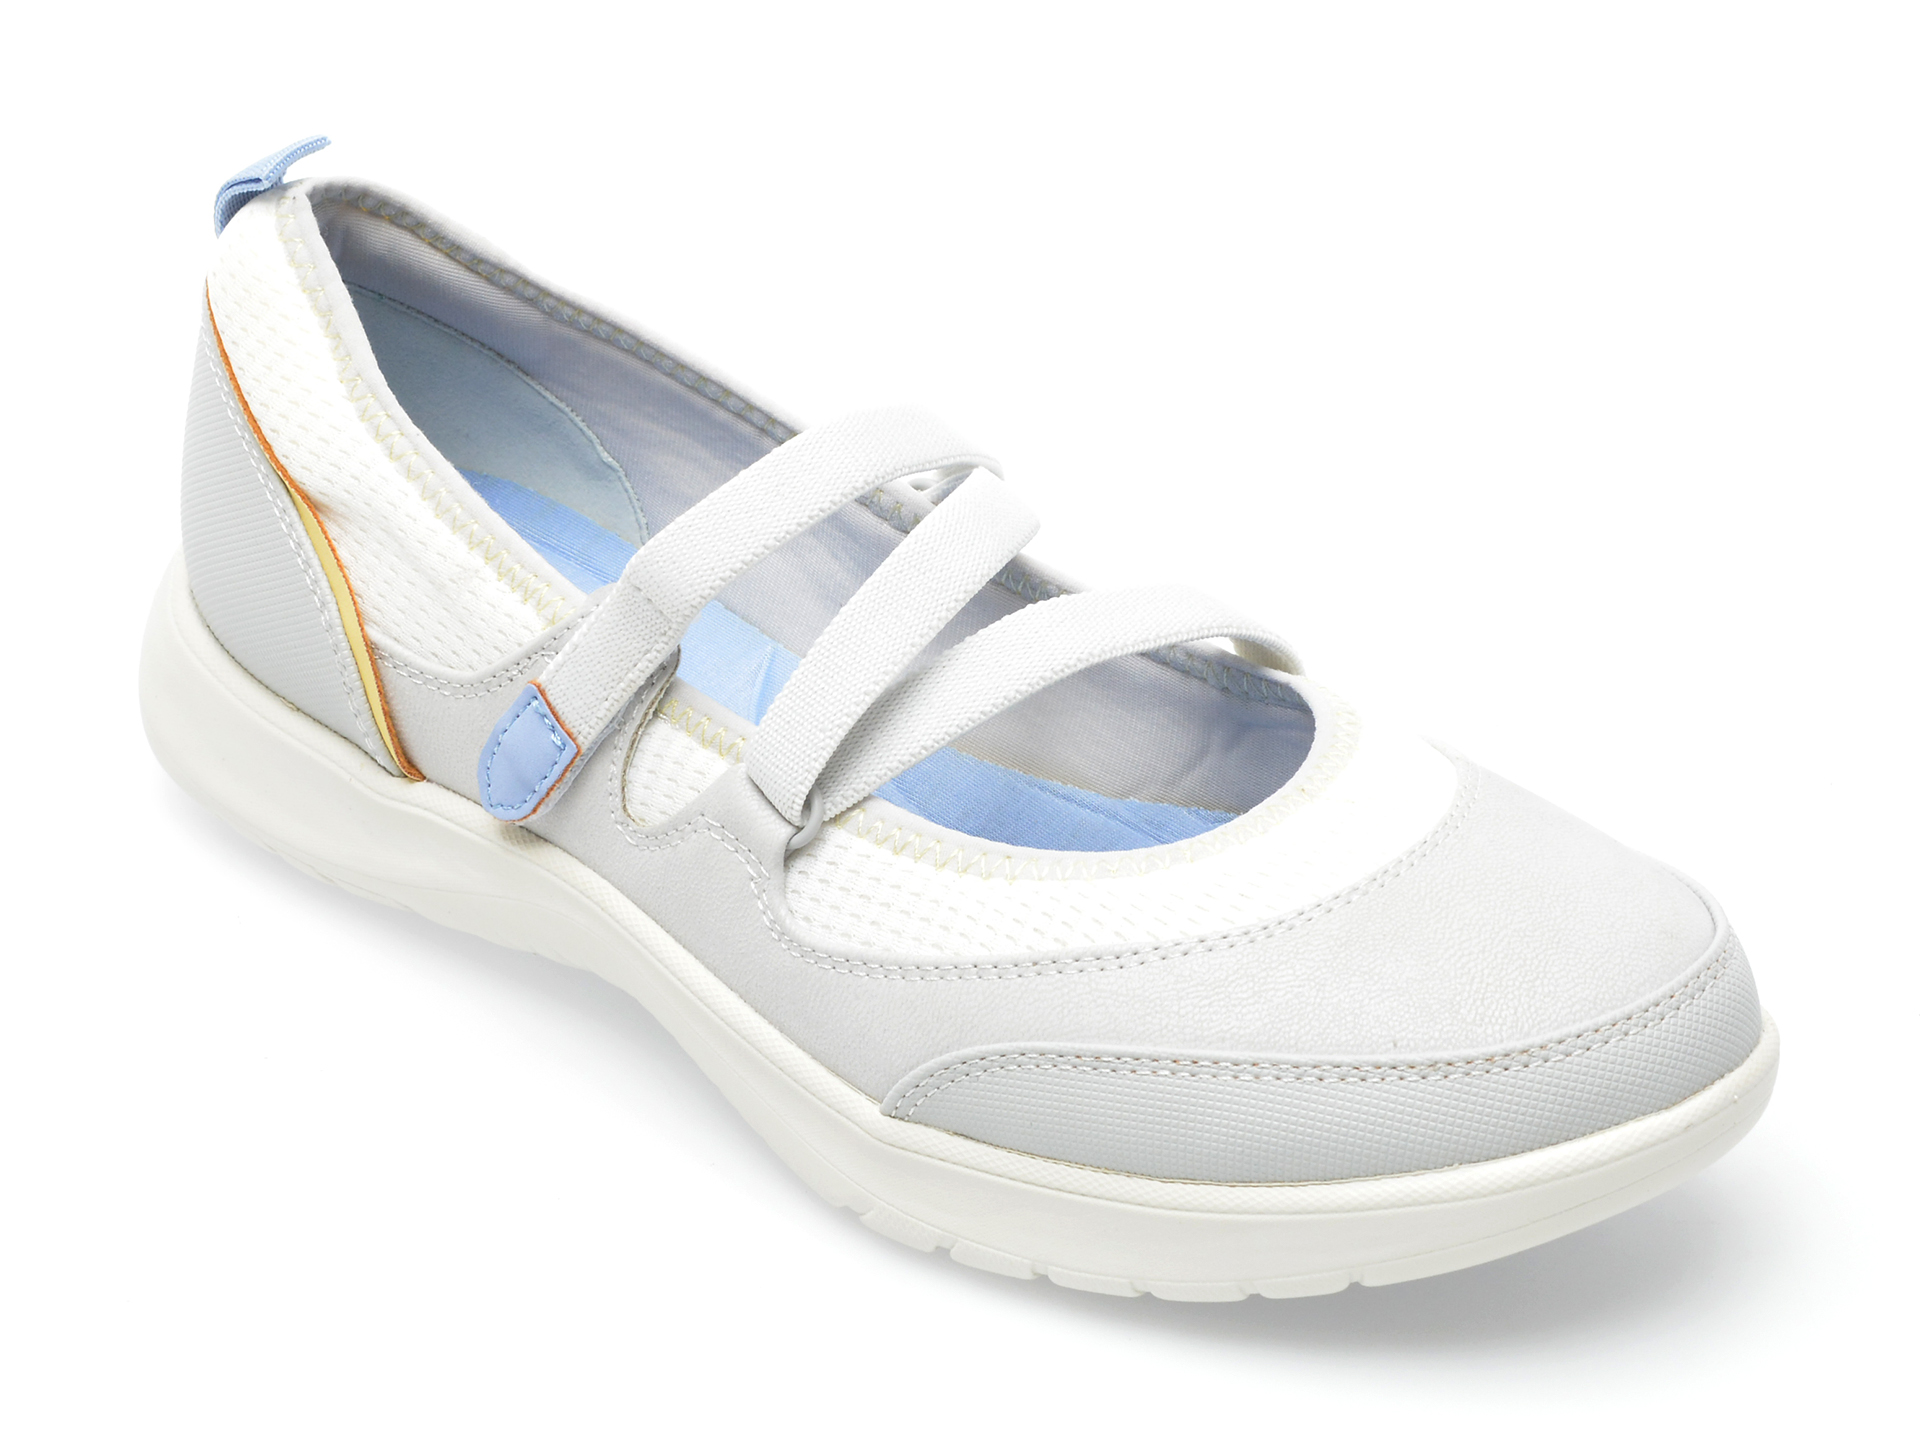 Pantofi CLARKS albi, ADELLA SAIL 0912, din material textil Clarks